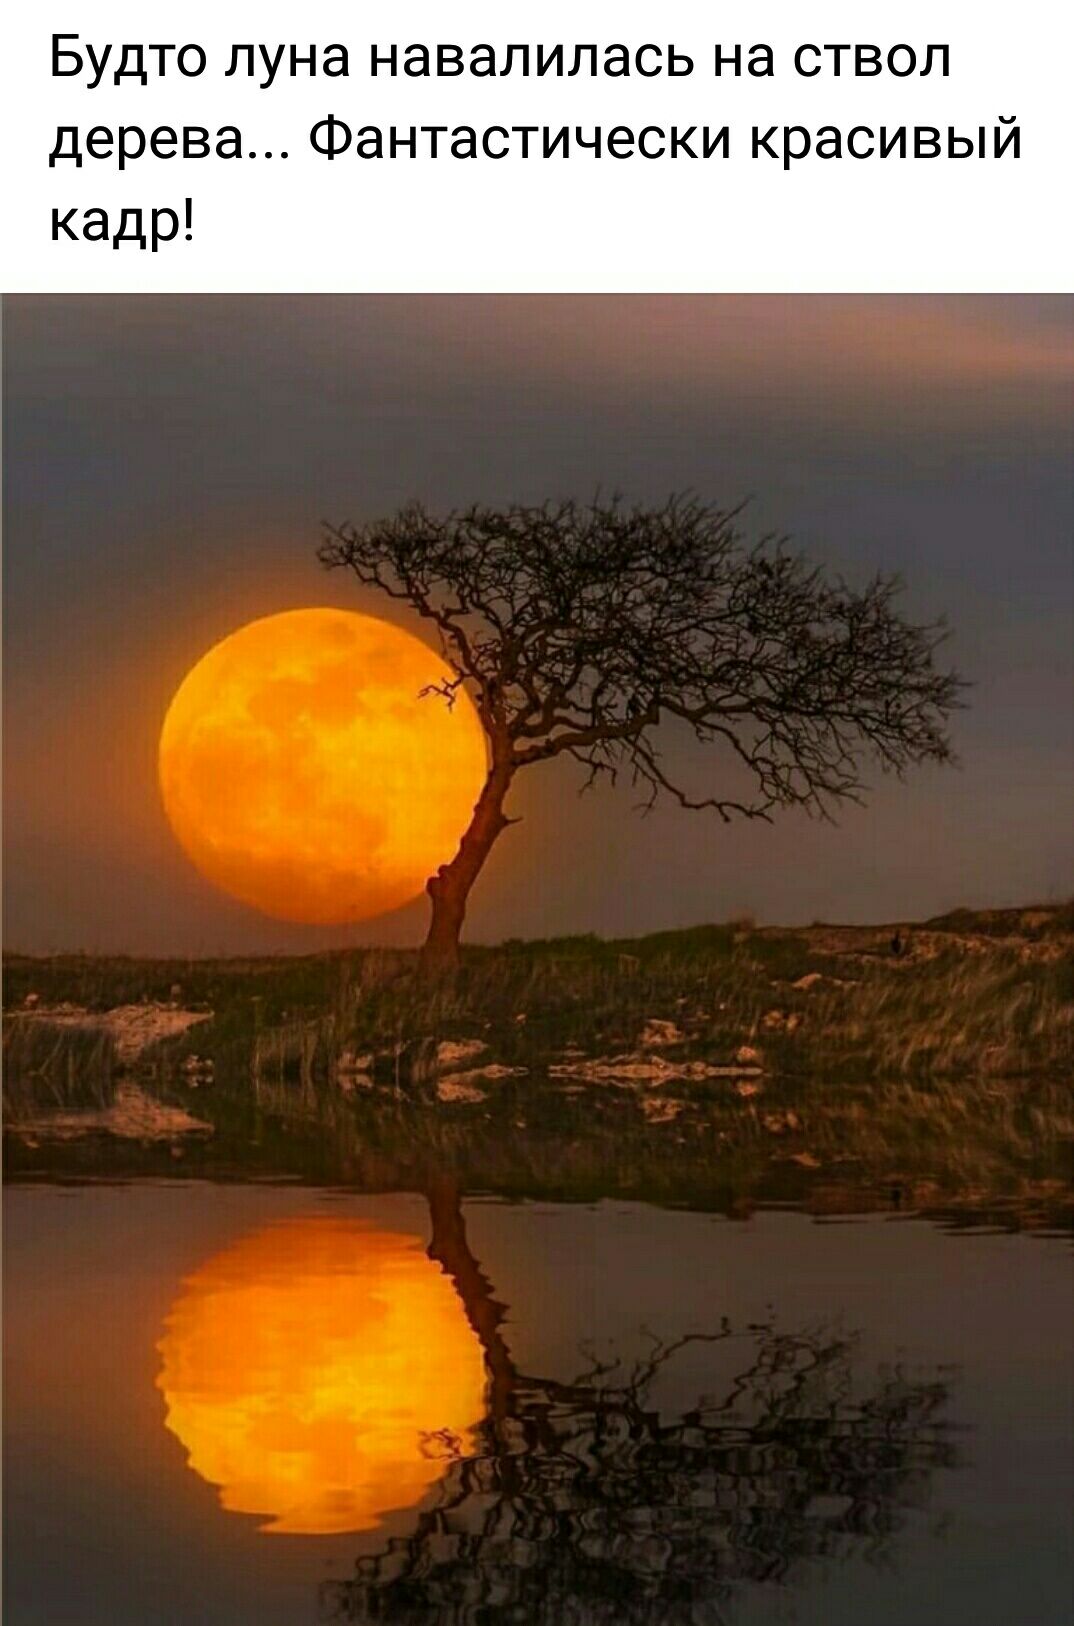 Будто луна навалилась на ствол дерева Фантастически красивый кадр